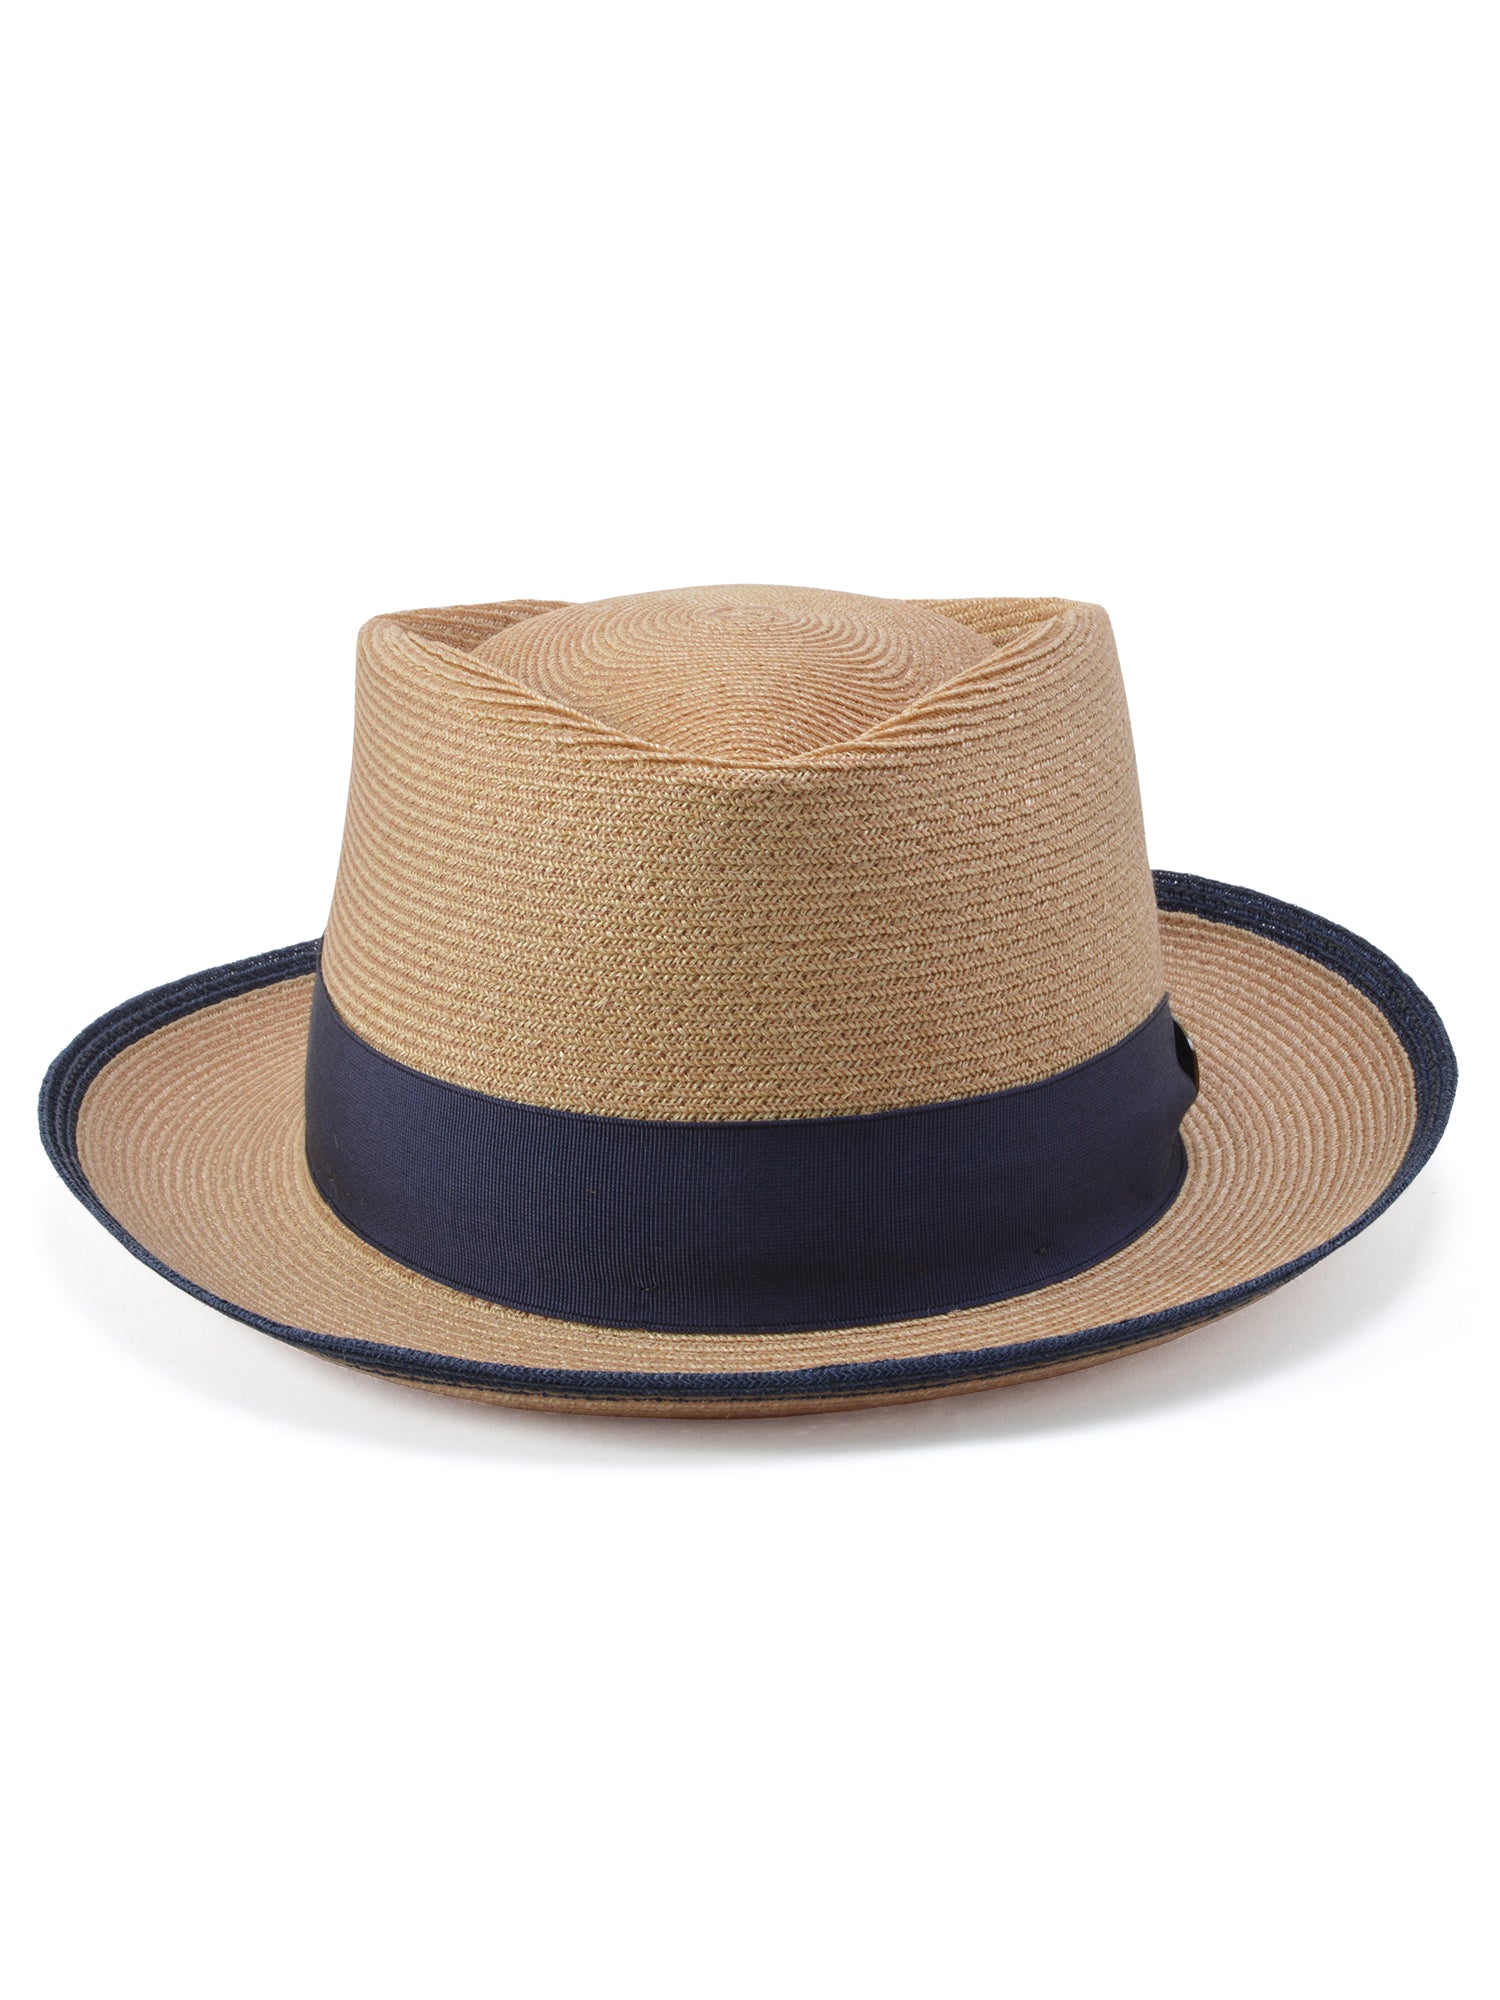 Dobbs The Lineup Hemp Straw Fedora Hat in Beige/Navy - 0